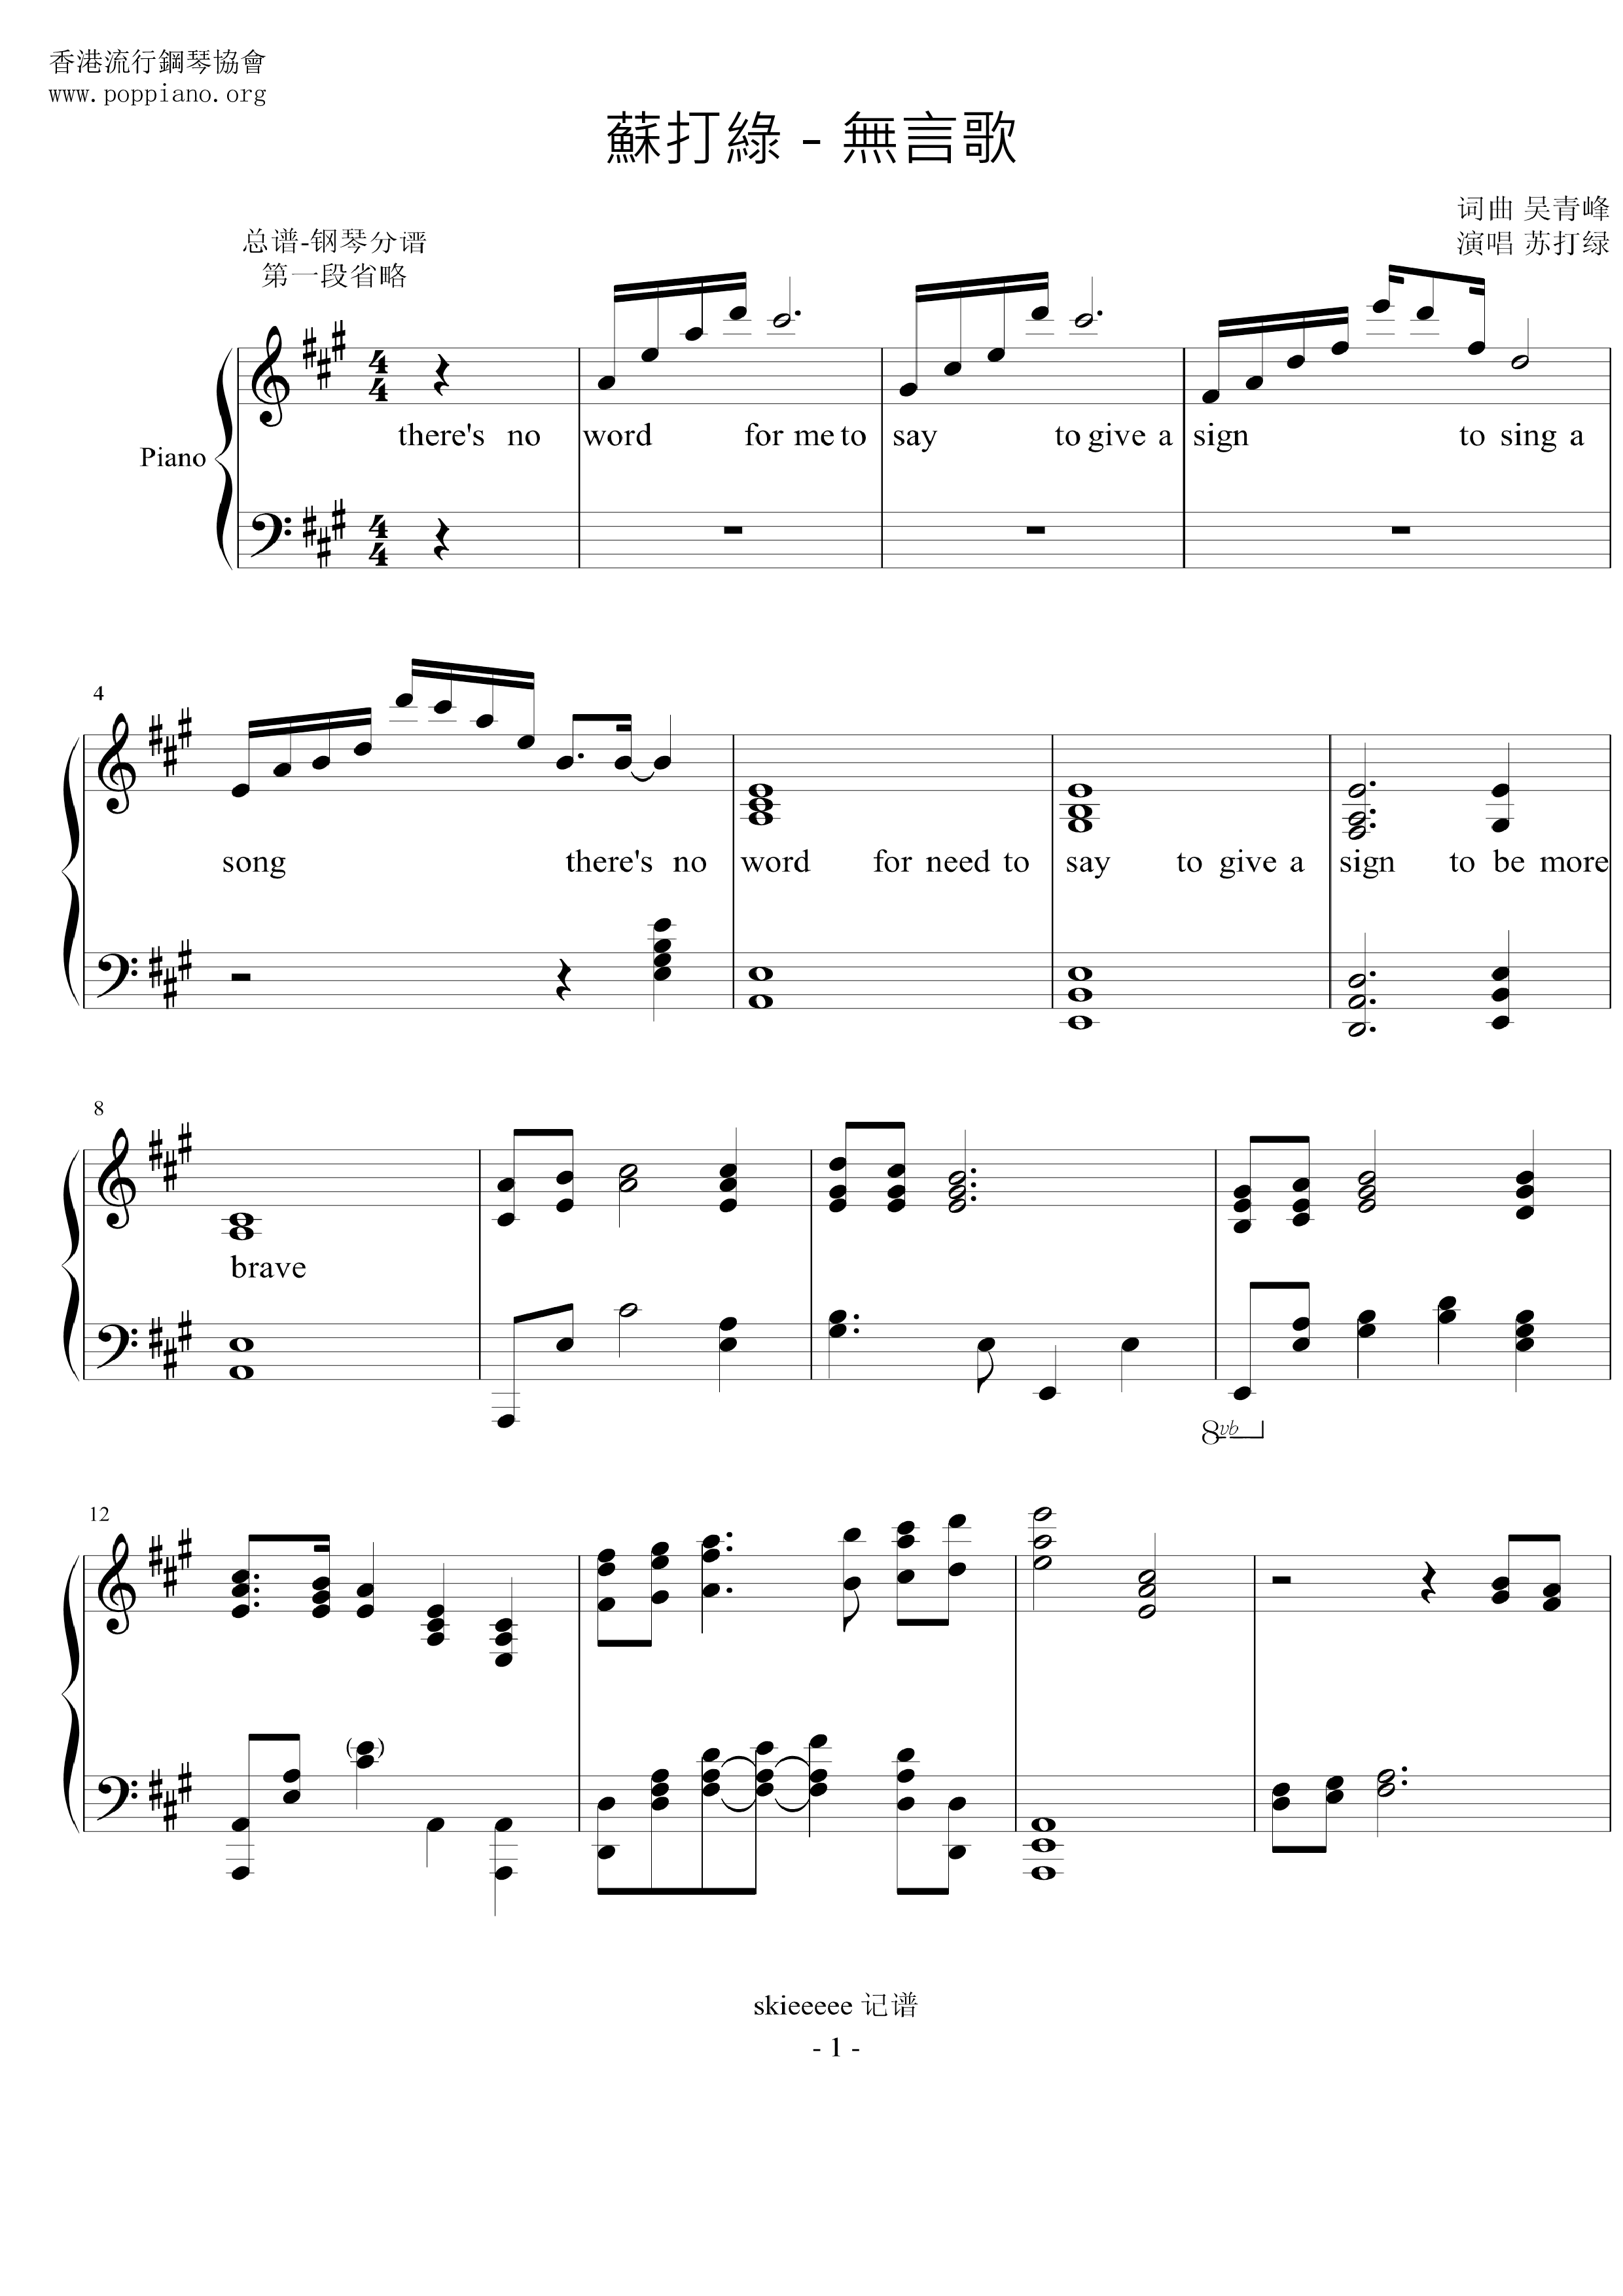 Wordless Song Score